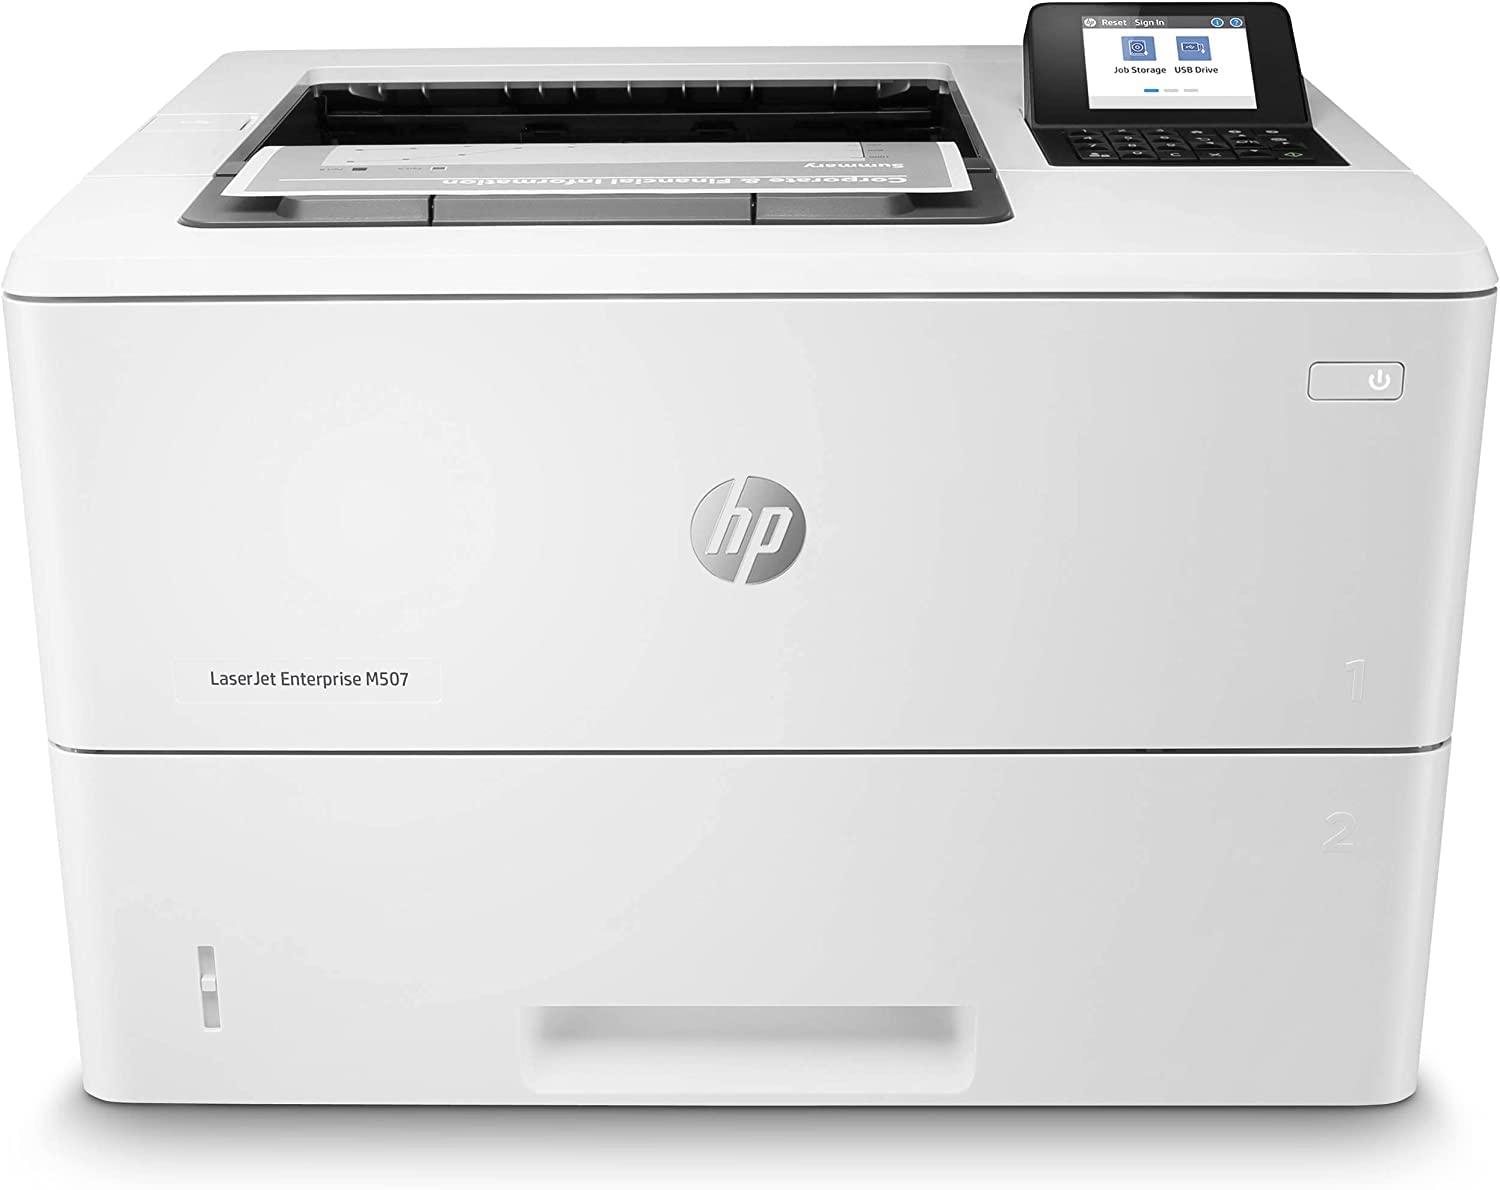  HP Laserjet Pro MFP M283cdw オールインワン ワイヤレス カラー レーザー プリンタ、ホワイト - 印刷 スキャン コピー FAX - 22 ppm、600 x 600 dpi、自動両面印刷、50...